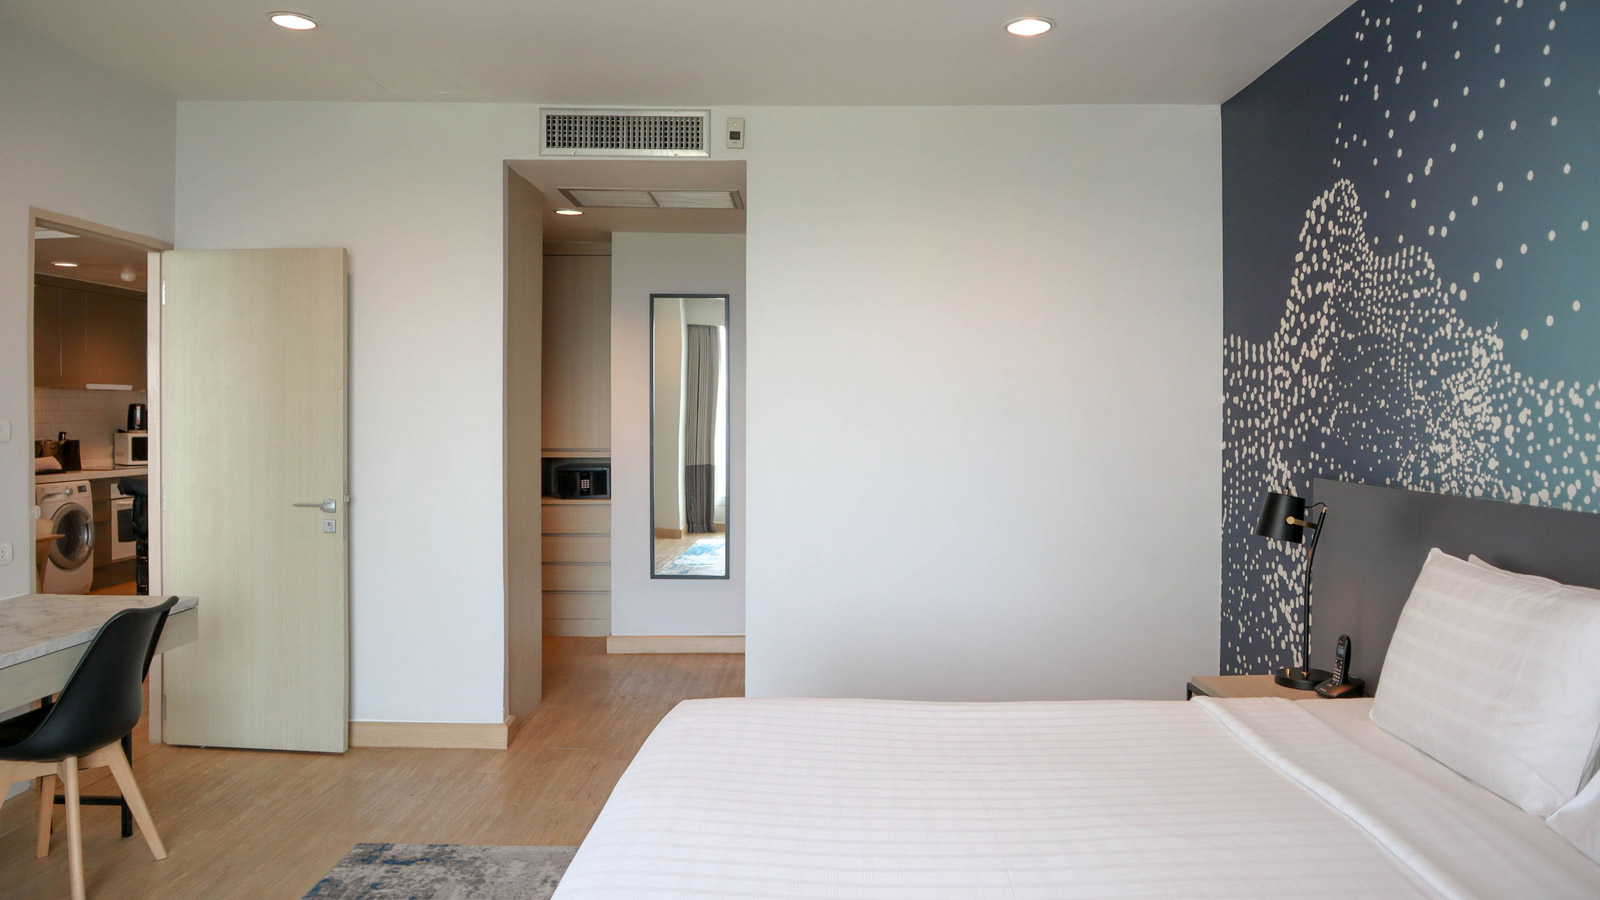 Three Bedroom Lakeview - Bedroom - שאמה לייקוויוו אסוק בנגקוק (Shama Lakeview Asoke Bangkok)